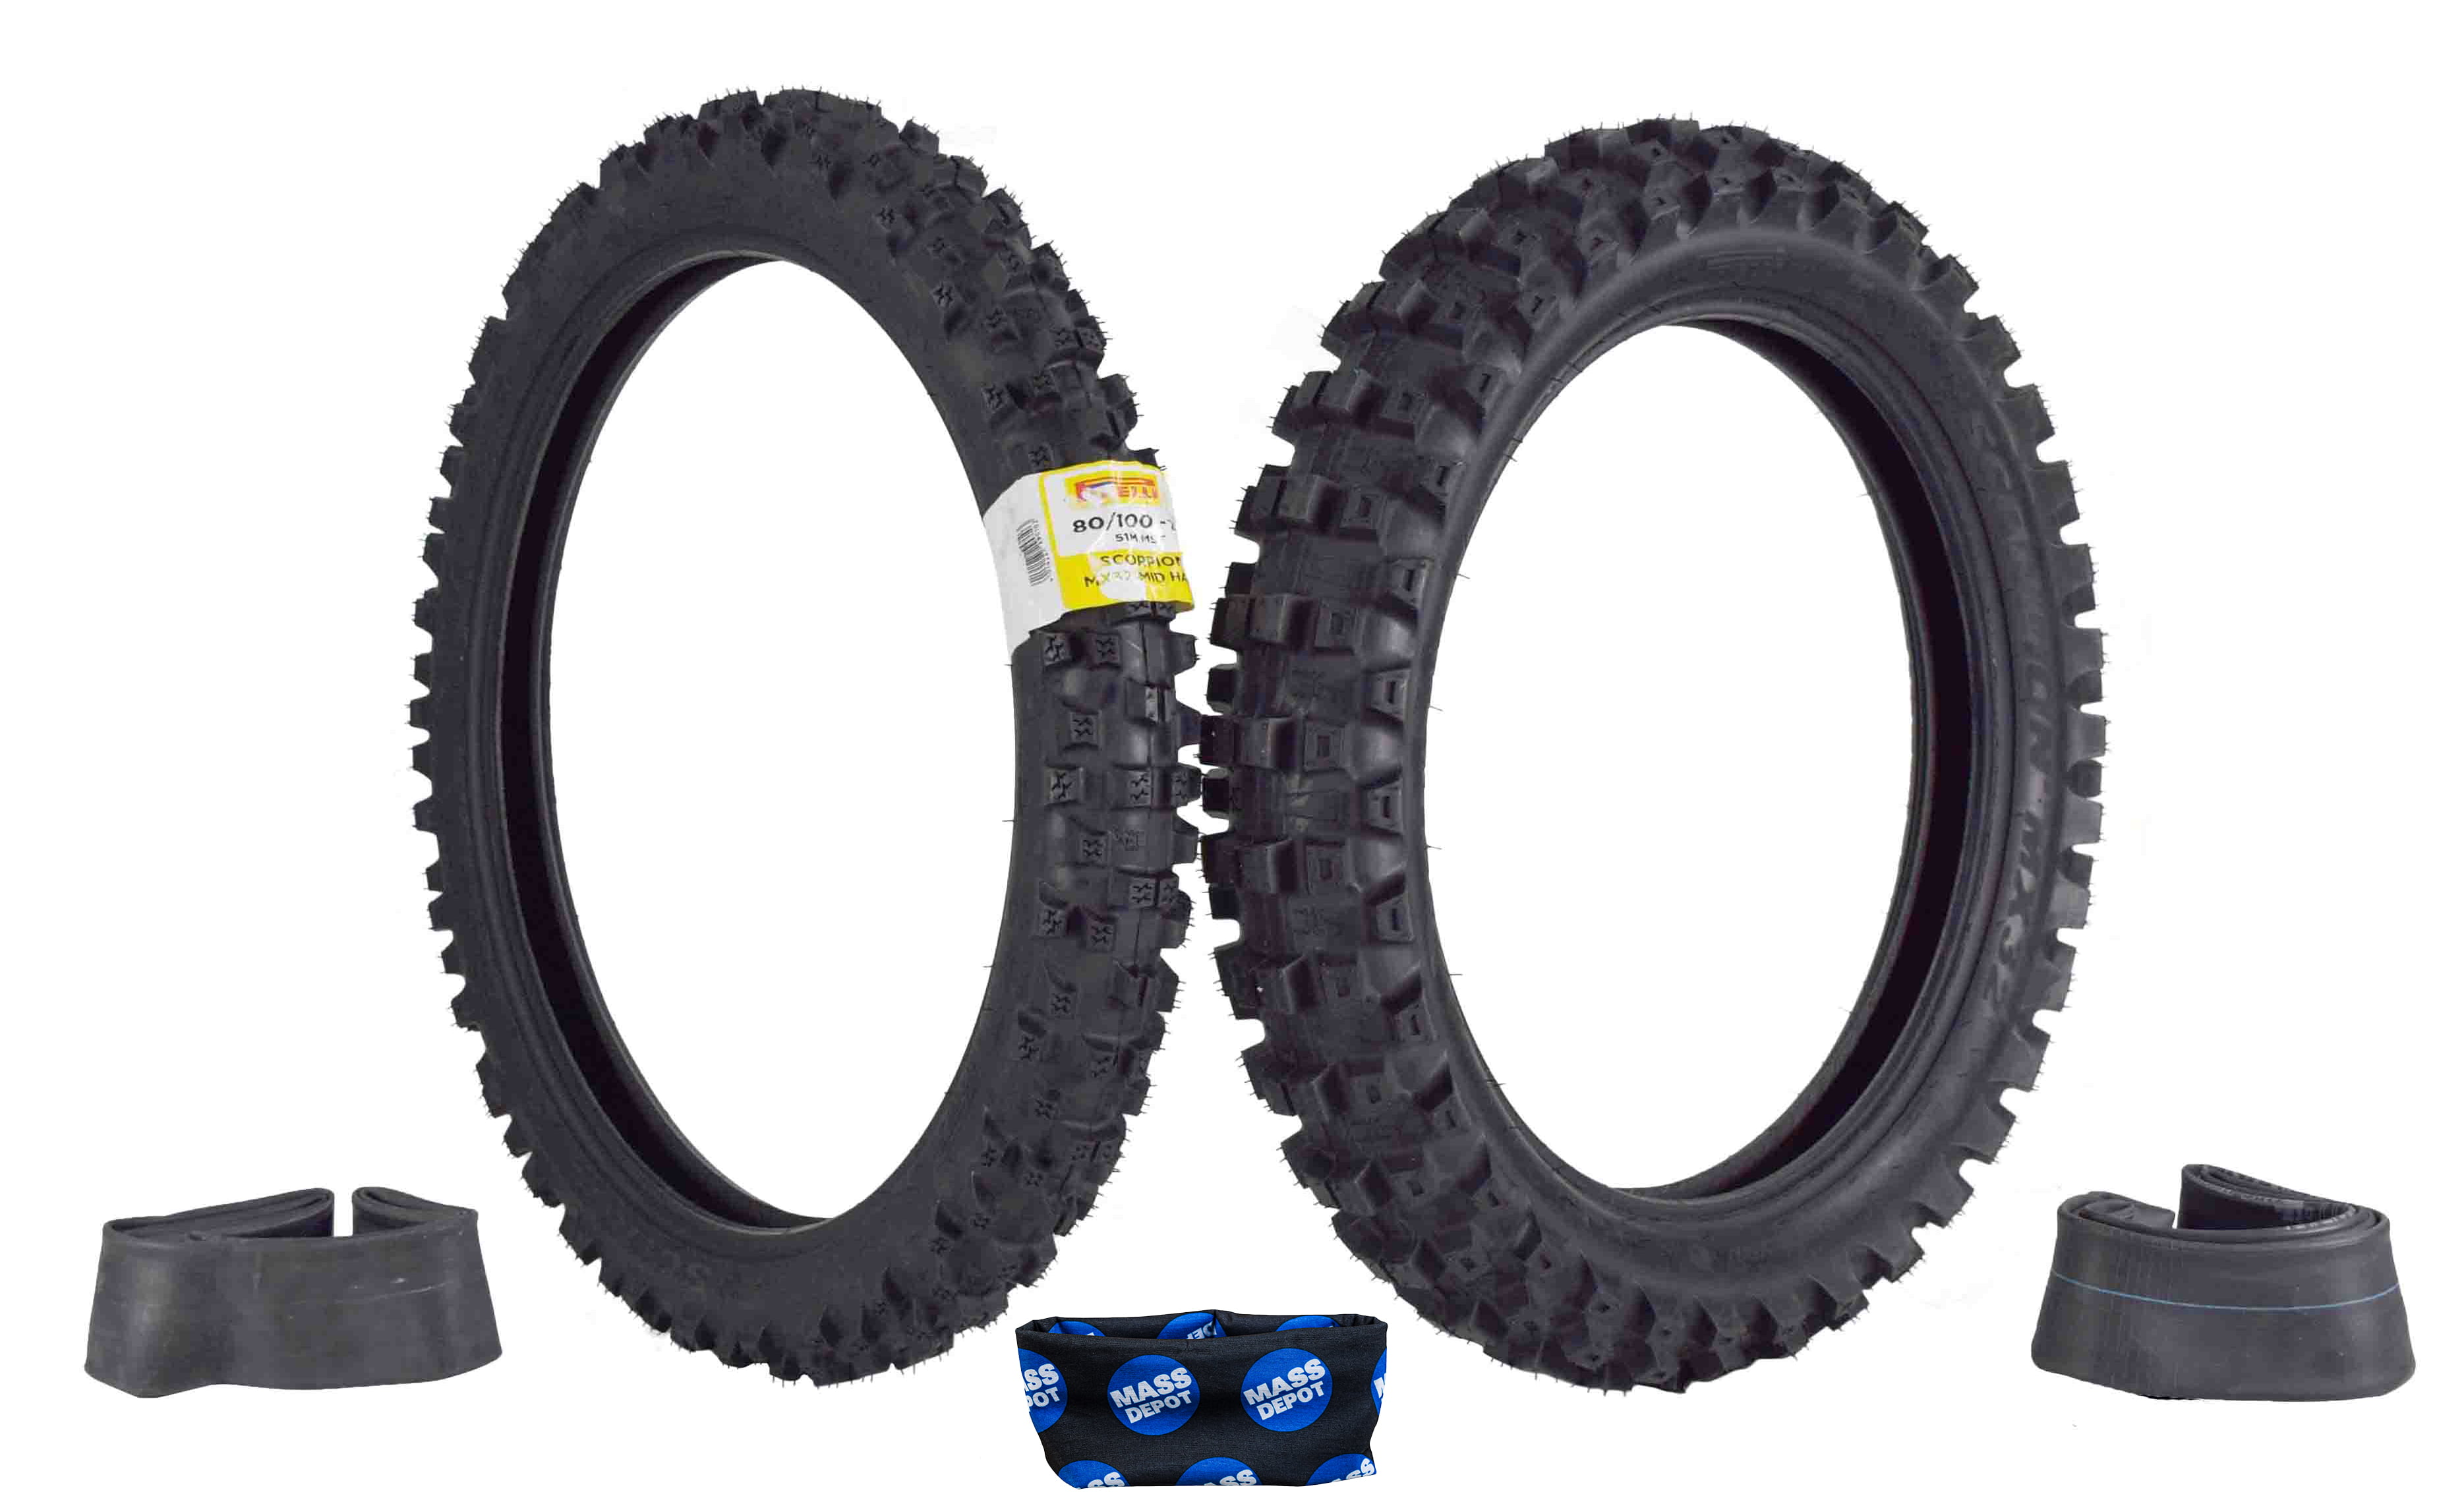 Pirelli Scorpion MX32 Mid Hard Dirt Bike 80/100-21 Front 120/80-19 Rear Motorcycle Tires Set w Tubes 